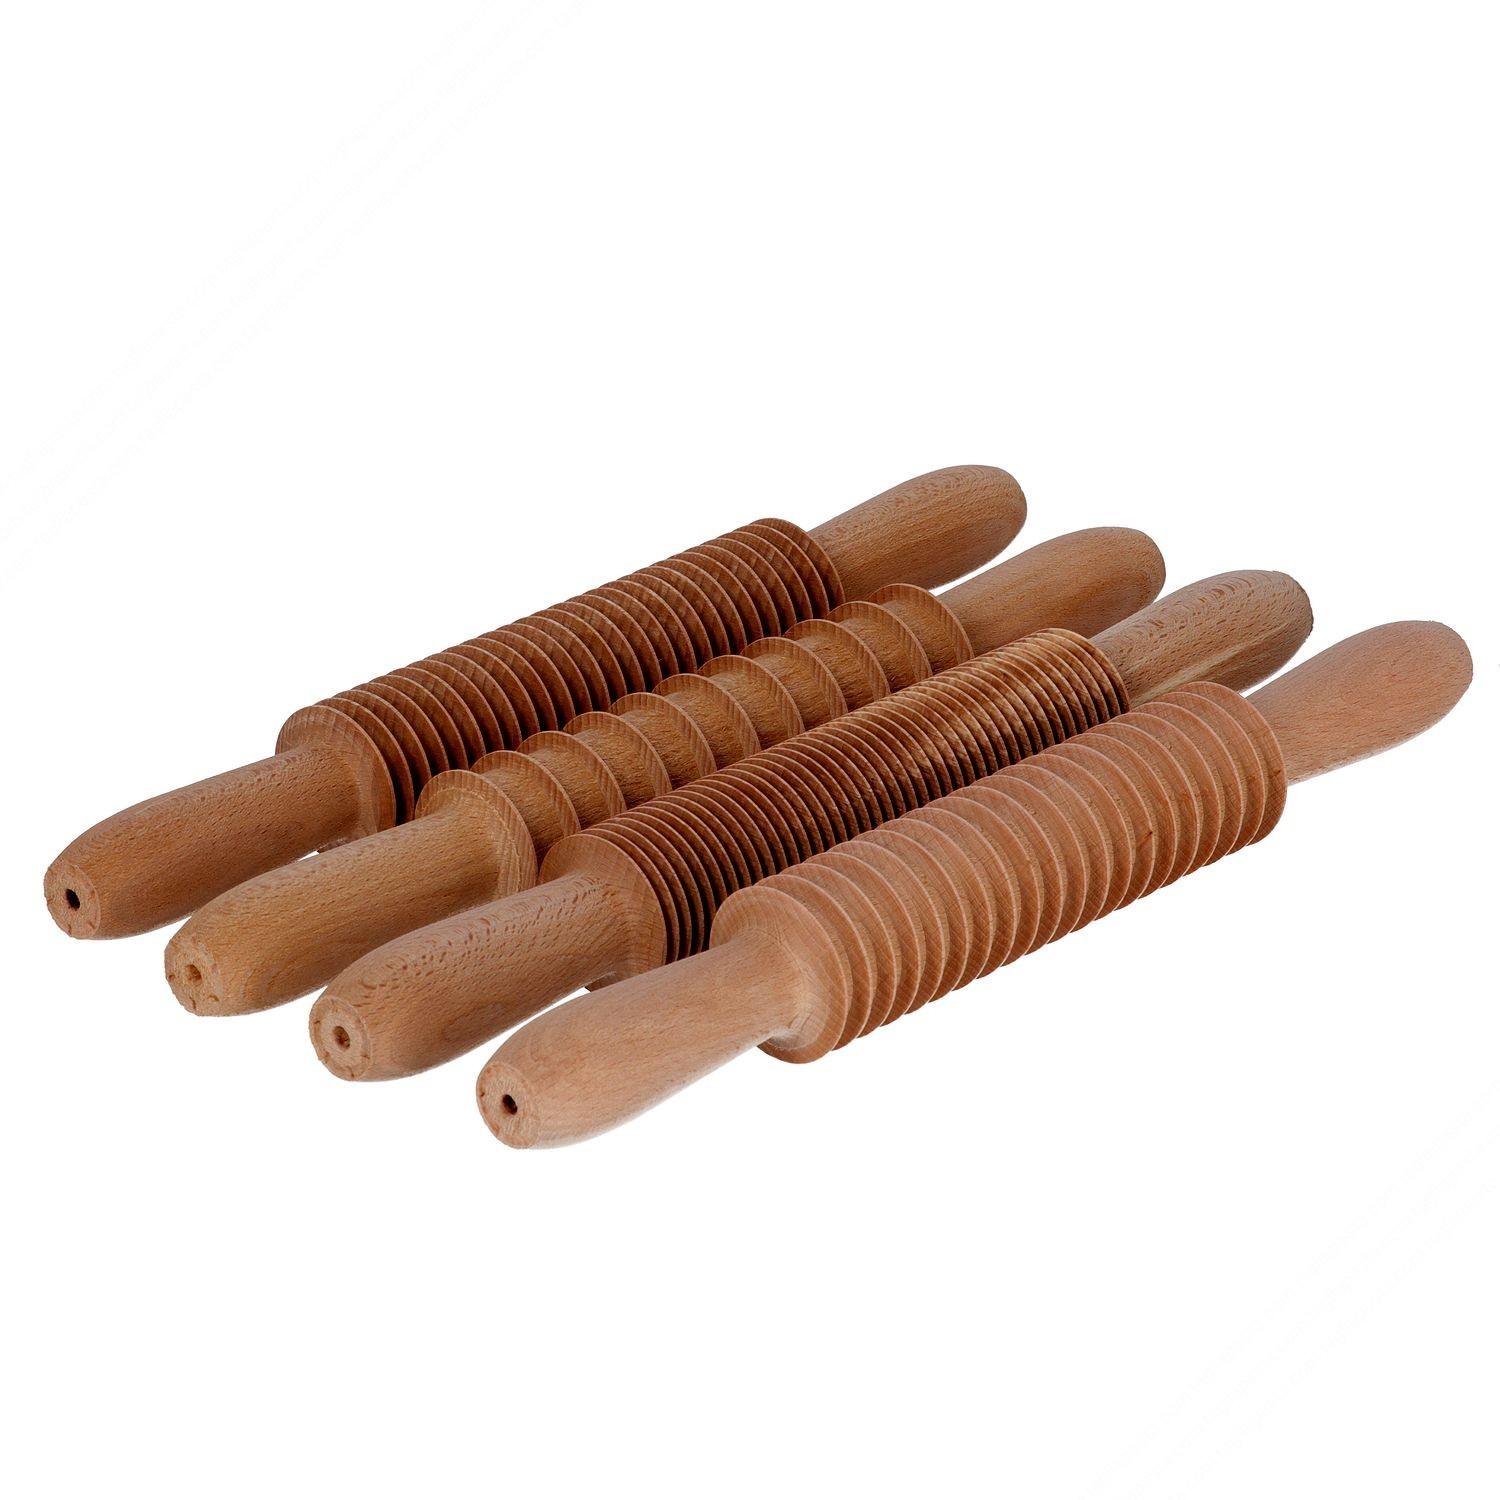 https://www.tagliapasta.com/59-thickbox_default/kit-of-4-cutter-rolling-pins-in-beech-wood-to-cut-pasta.jpg